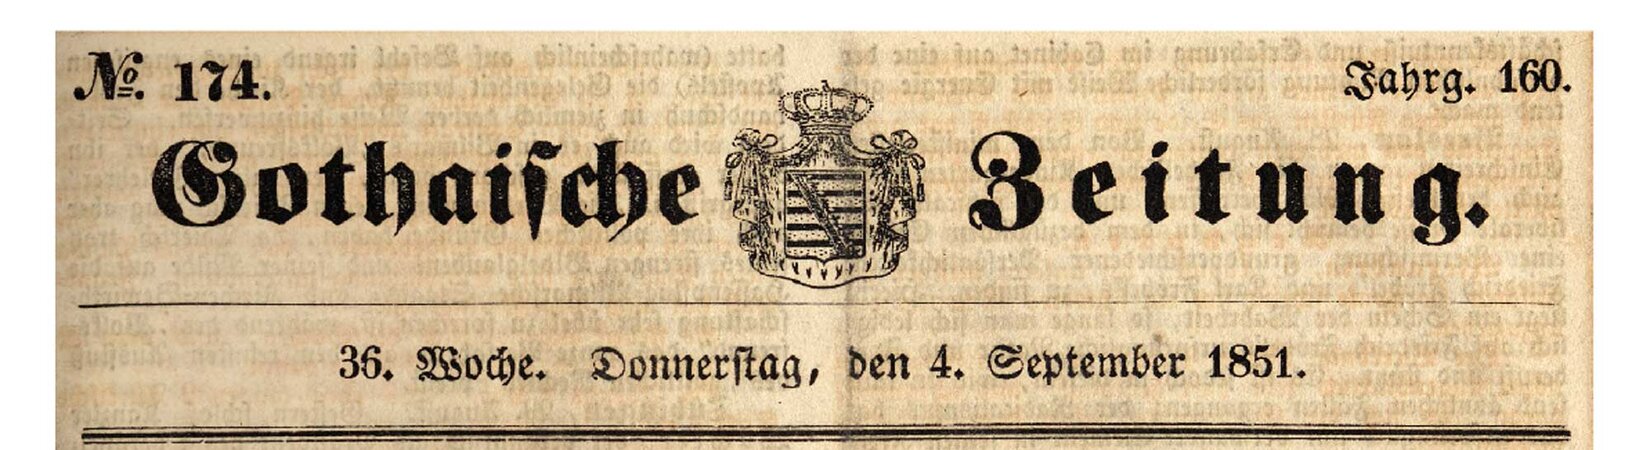 The Gotha Daily Newspaper Digital (1850-1918)